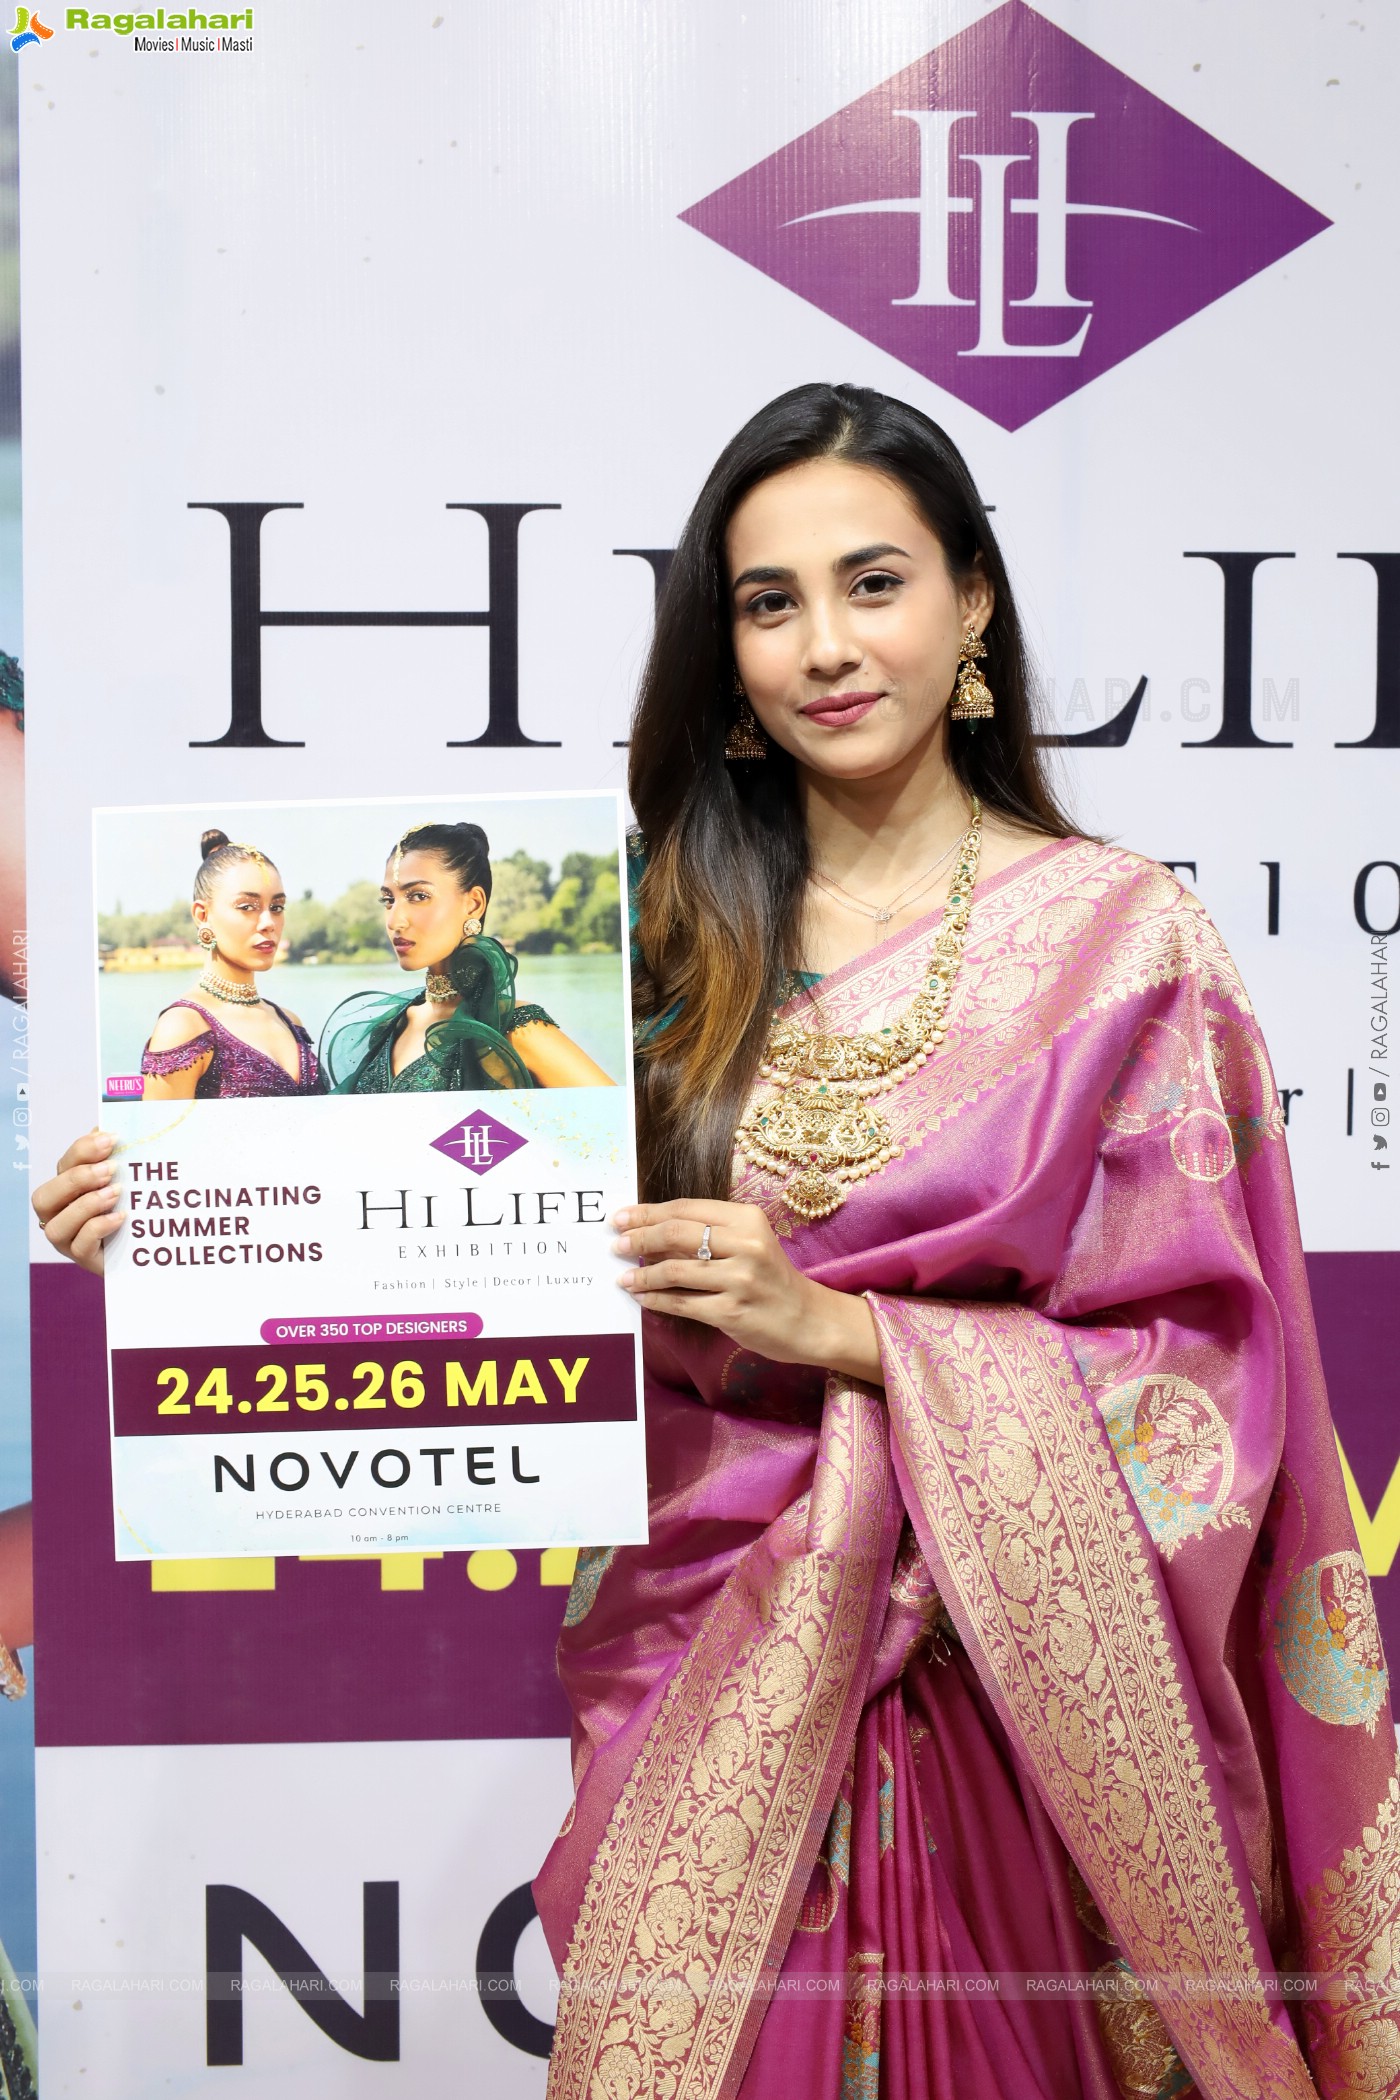 Hi-Life Exhibition Grand Fashion Showcase Date Announcement Event